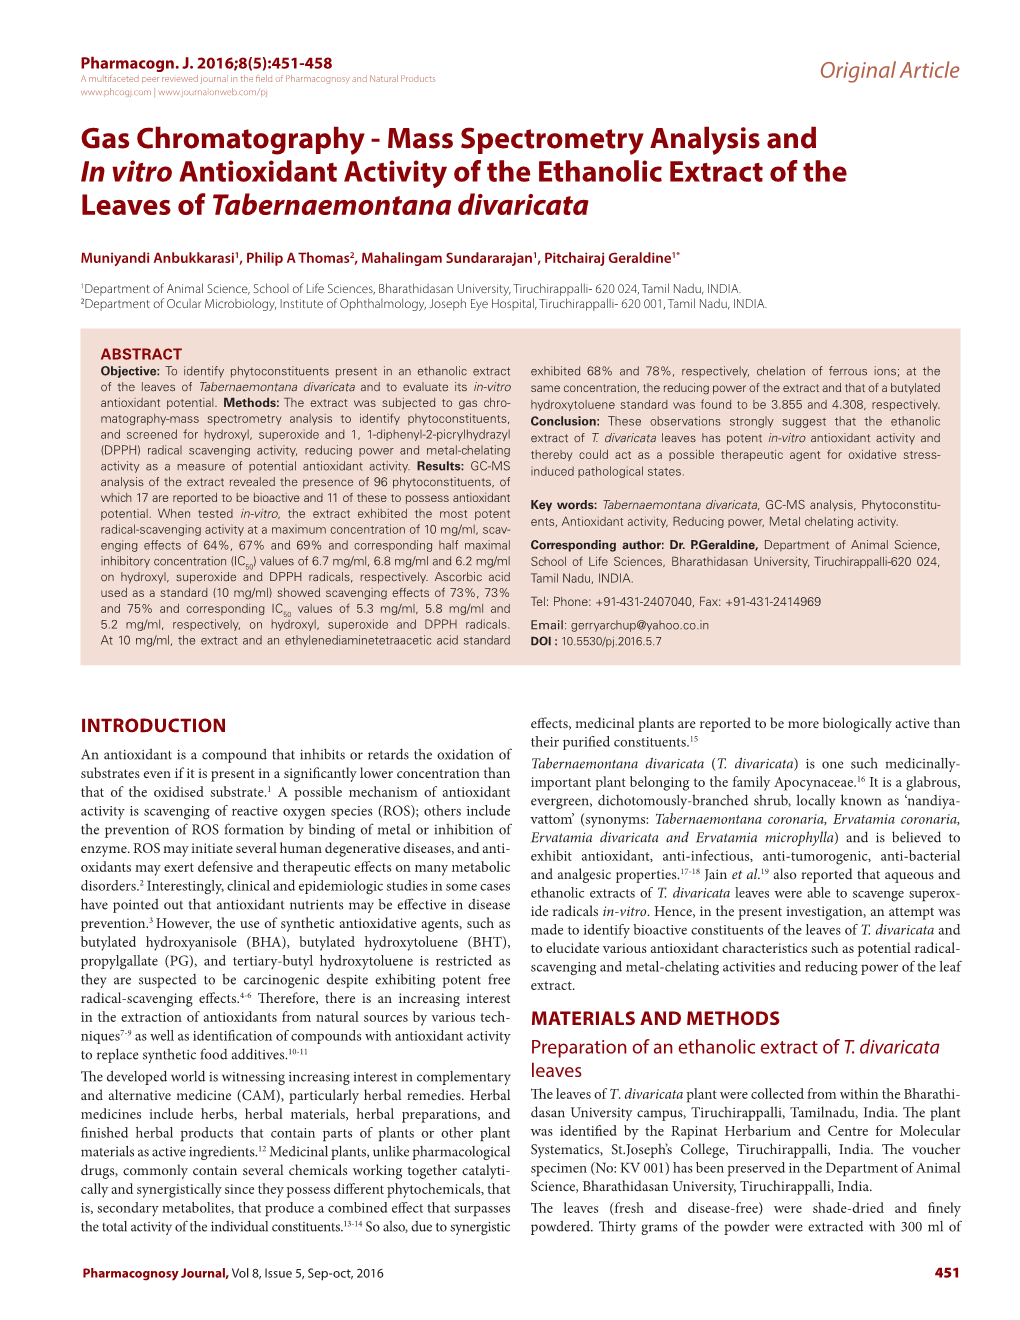 Gas Chromatography - Mass Spectrometry Analysis and in Vitro Antioxidant Activity of the Ethanolic Extract of the Leaves of Tabernaemontana Divaricata